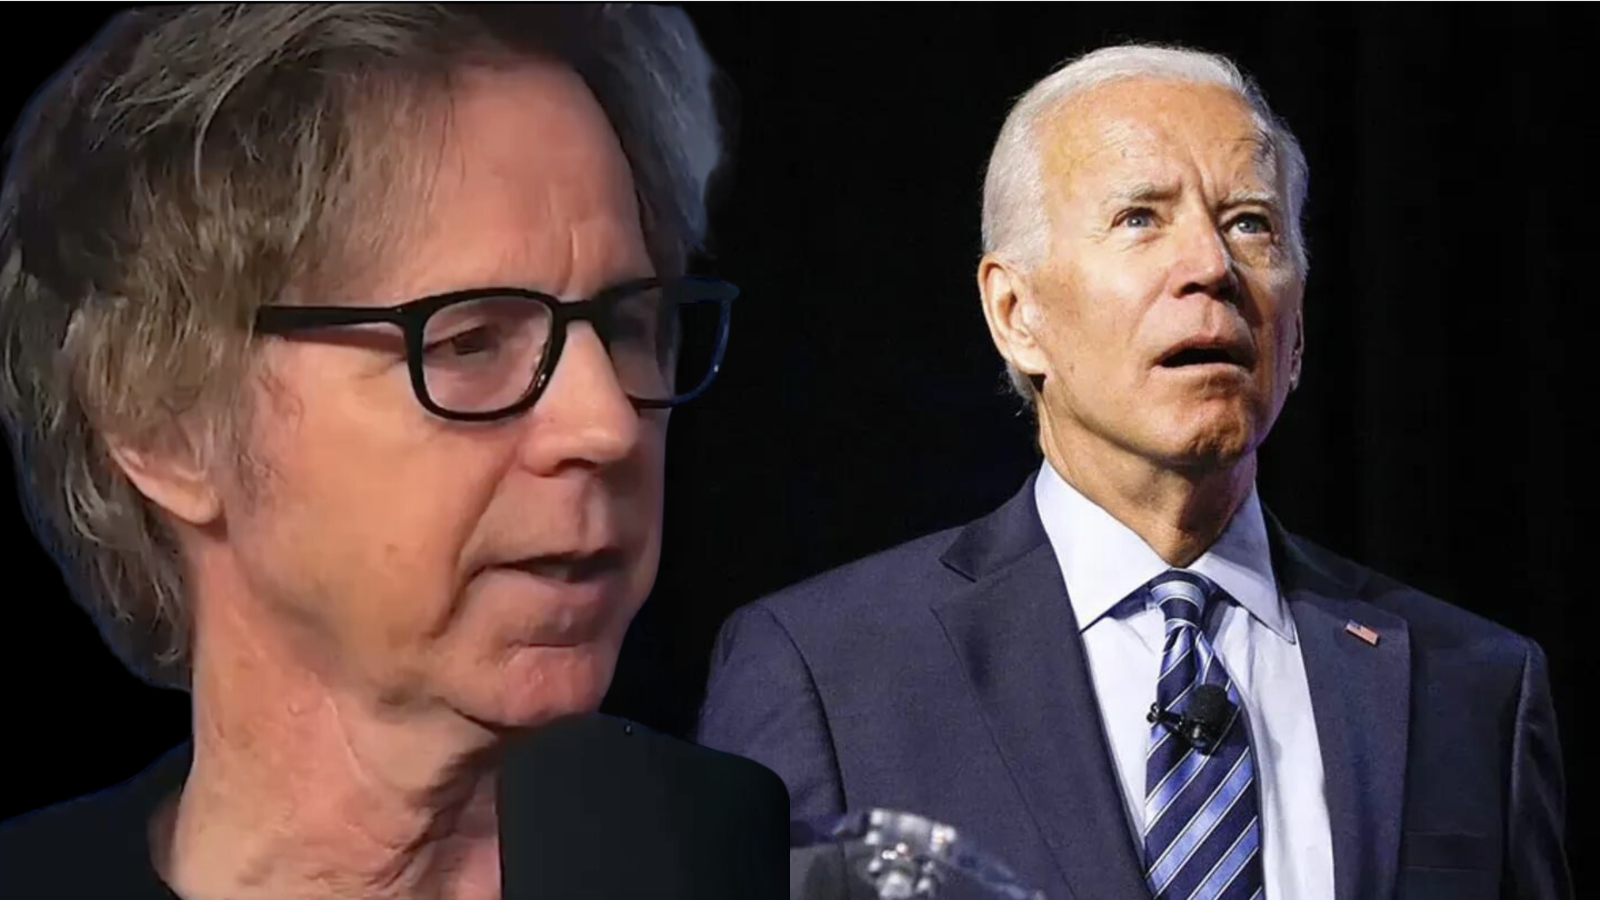 Is Dana Carvey “Playing” Joe Biden?